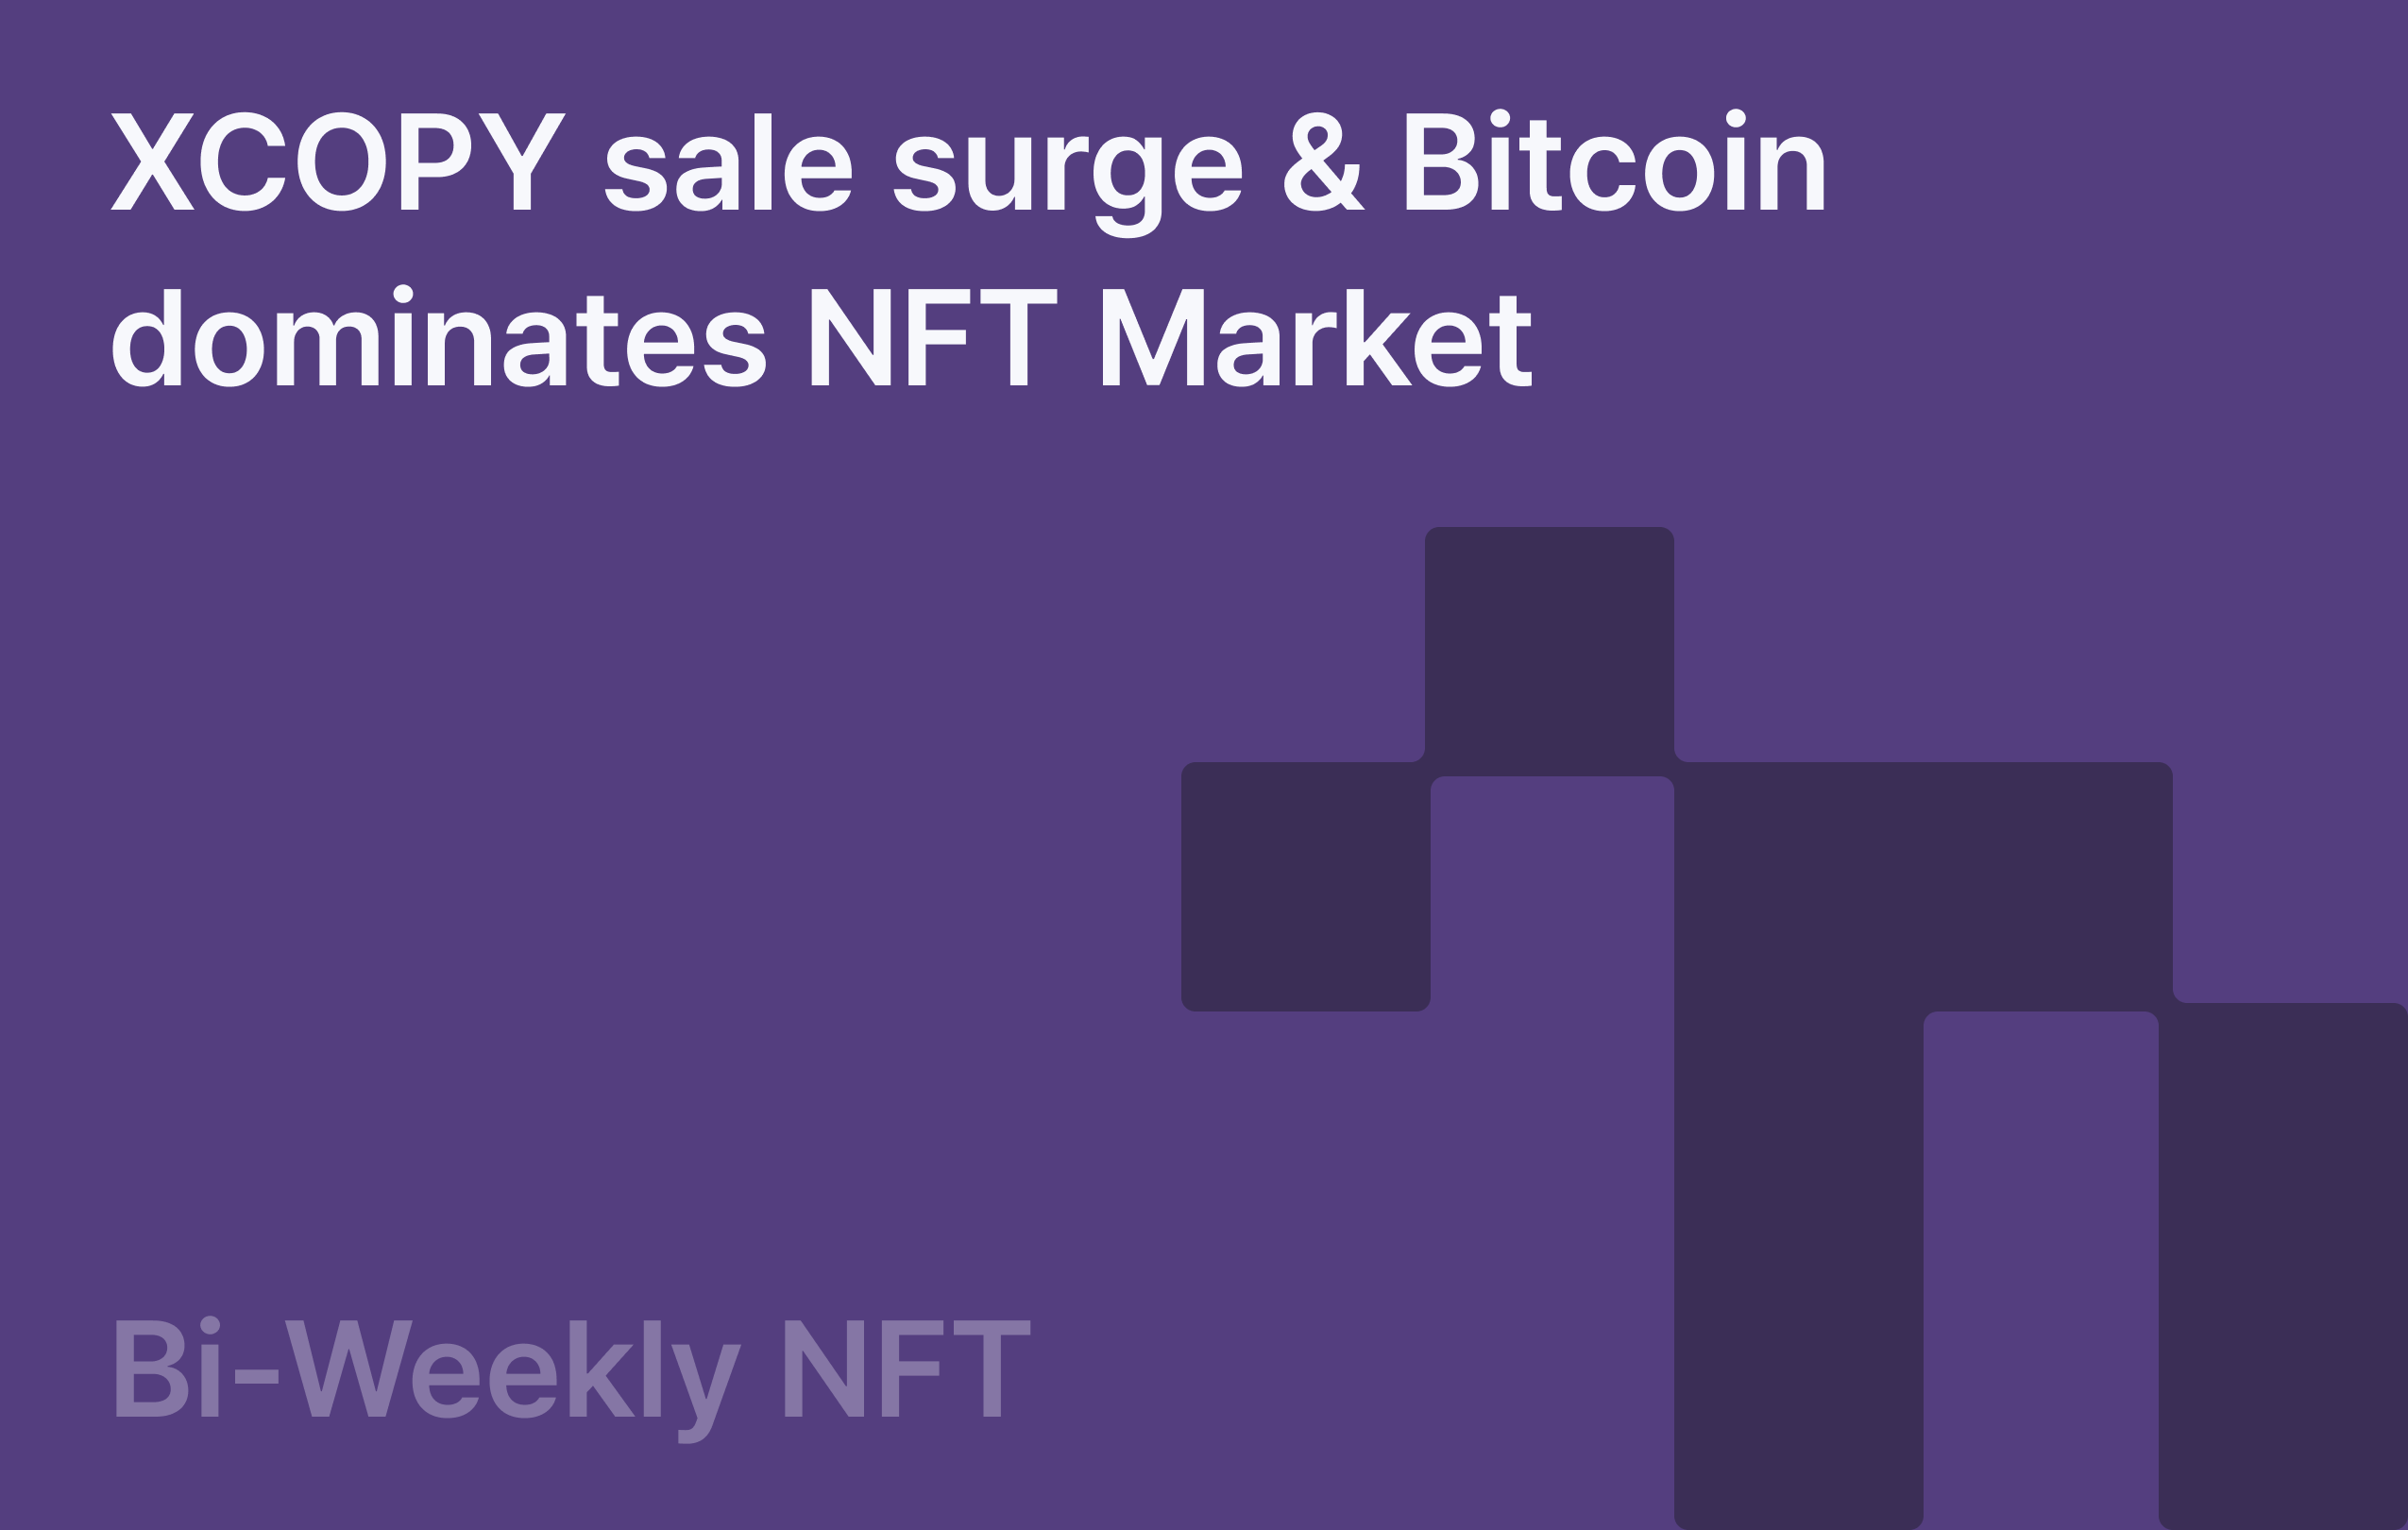 Bi-Weekly NFT: XCOPY sale surge & Bitcoin dominates NFT Market